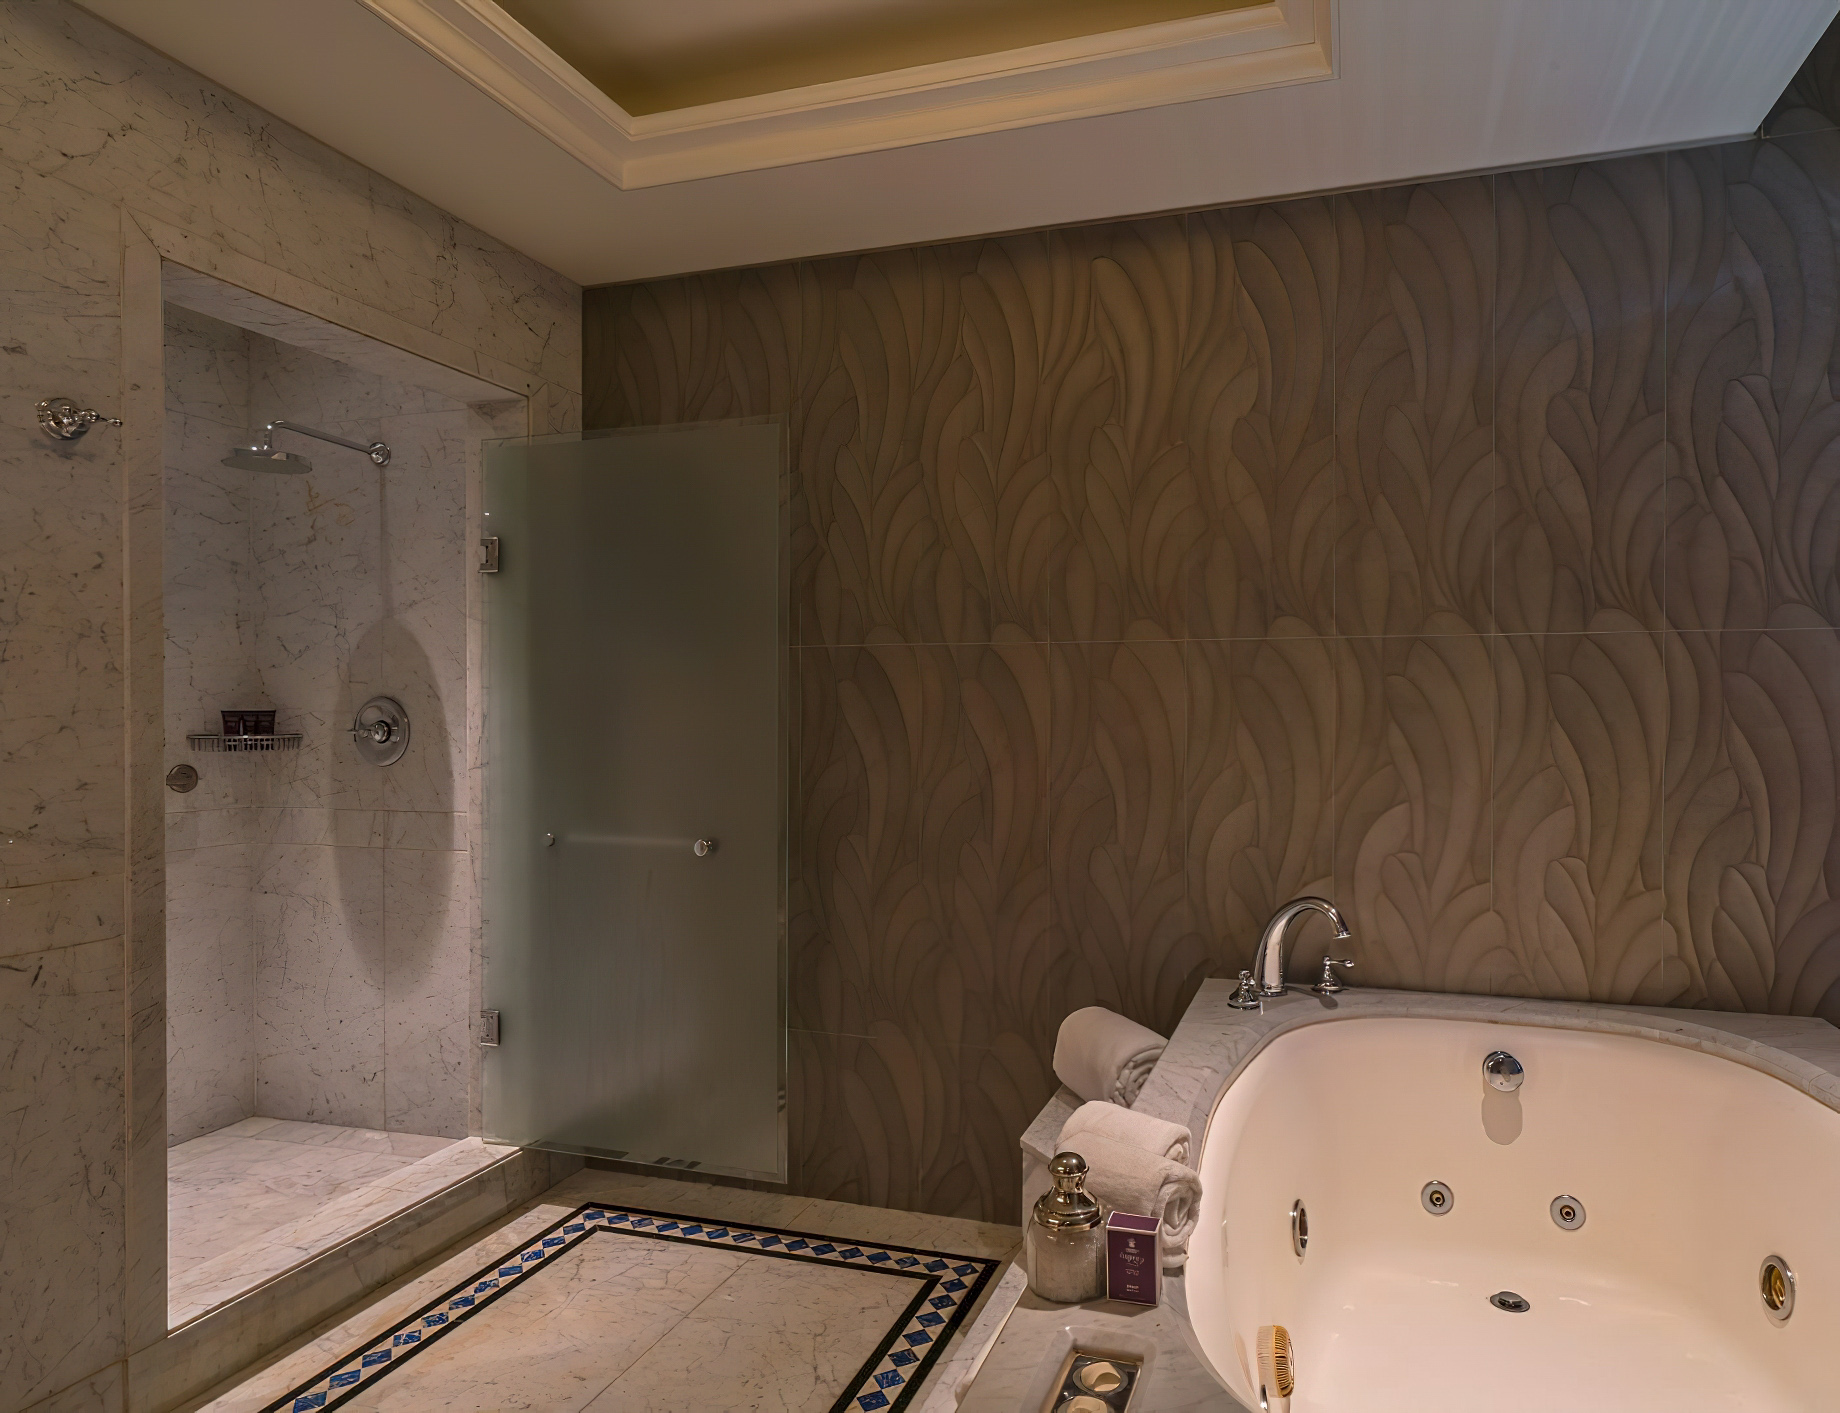 The Ritz-Carlton, Santiago Hotel – Santiago, Chile – Presidential Suite Bathroom Shower